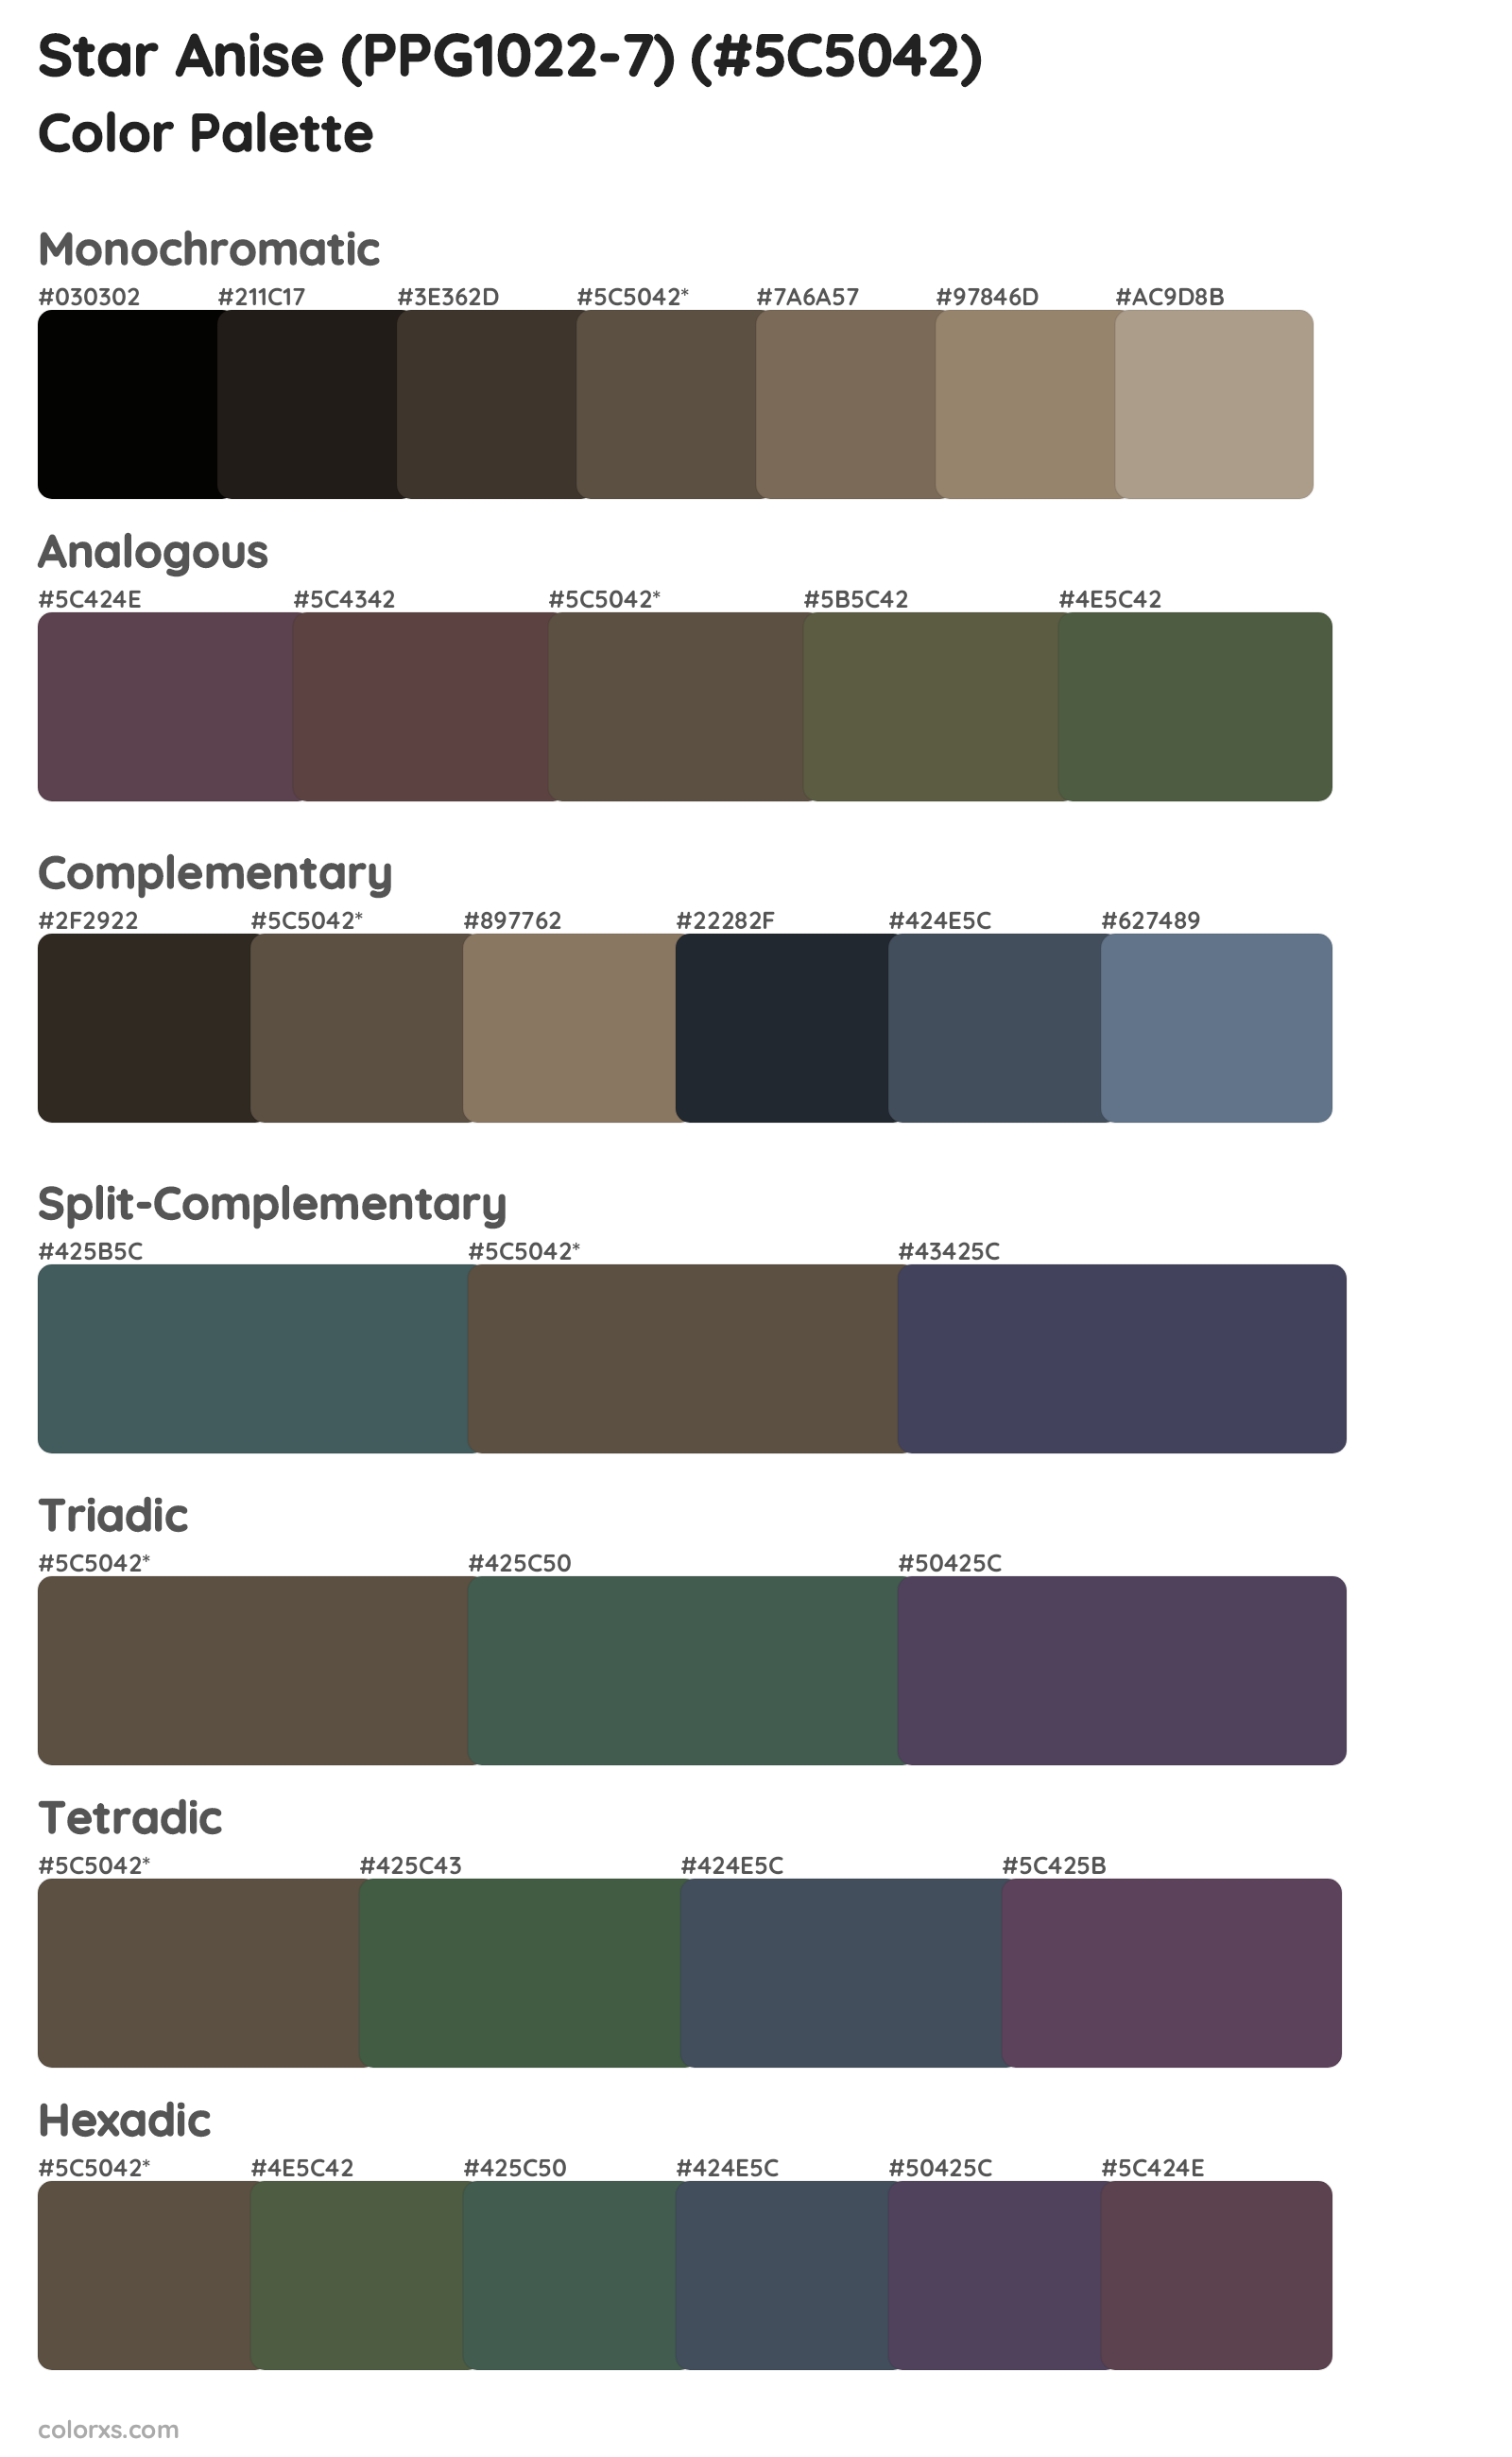 Star Anise (PPG1022-7) Color Scheme Palettes